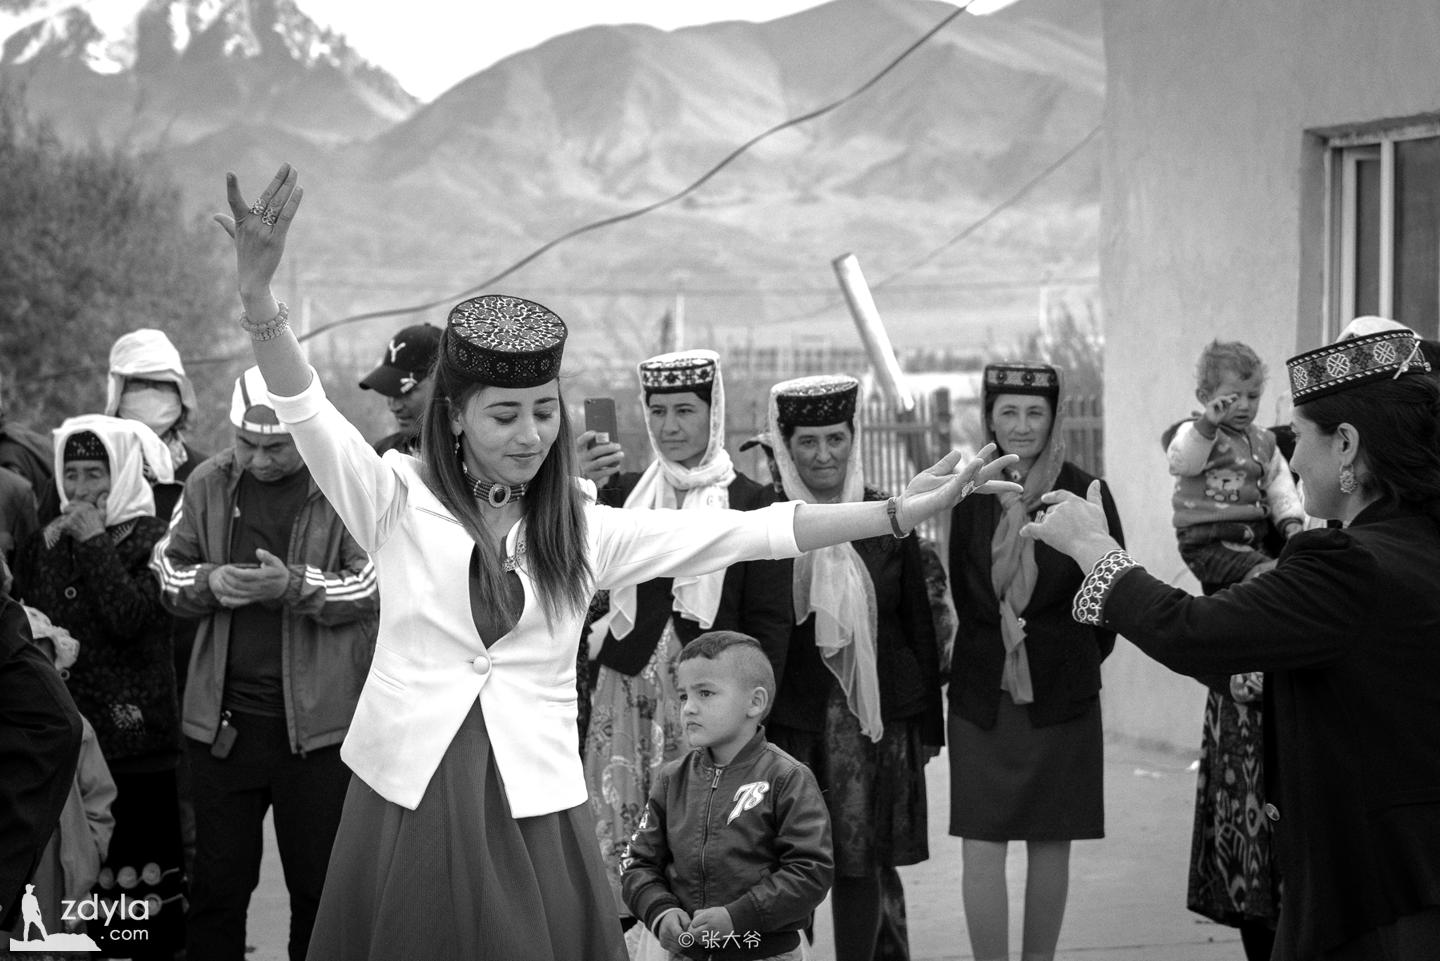 The first day of Tajik's wedding - fighting dance